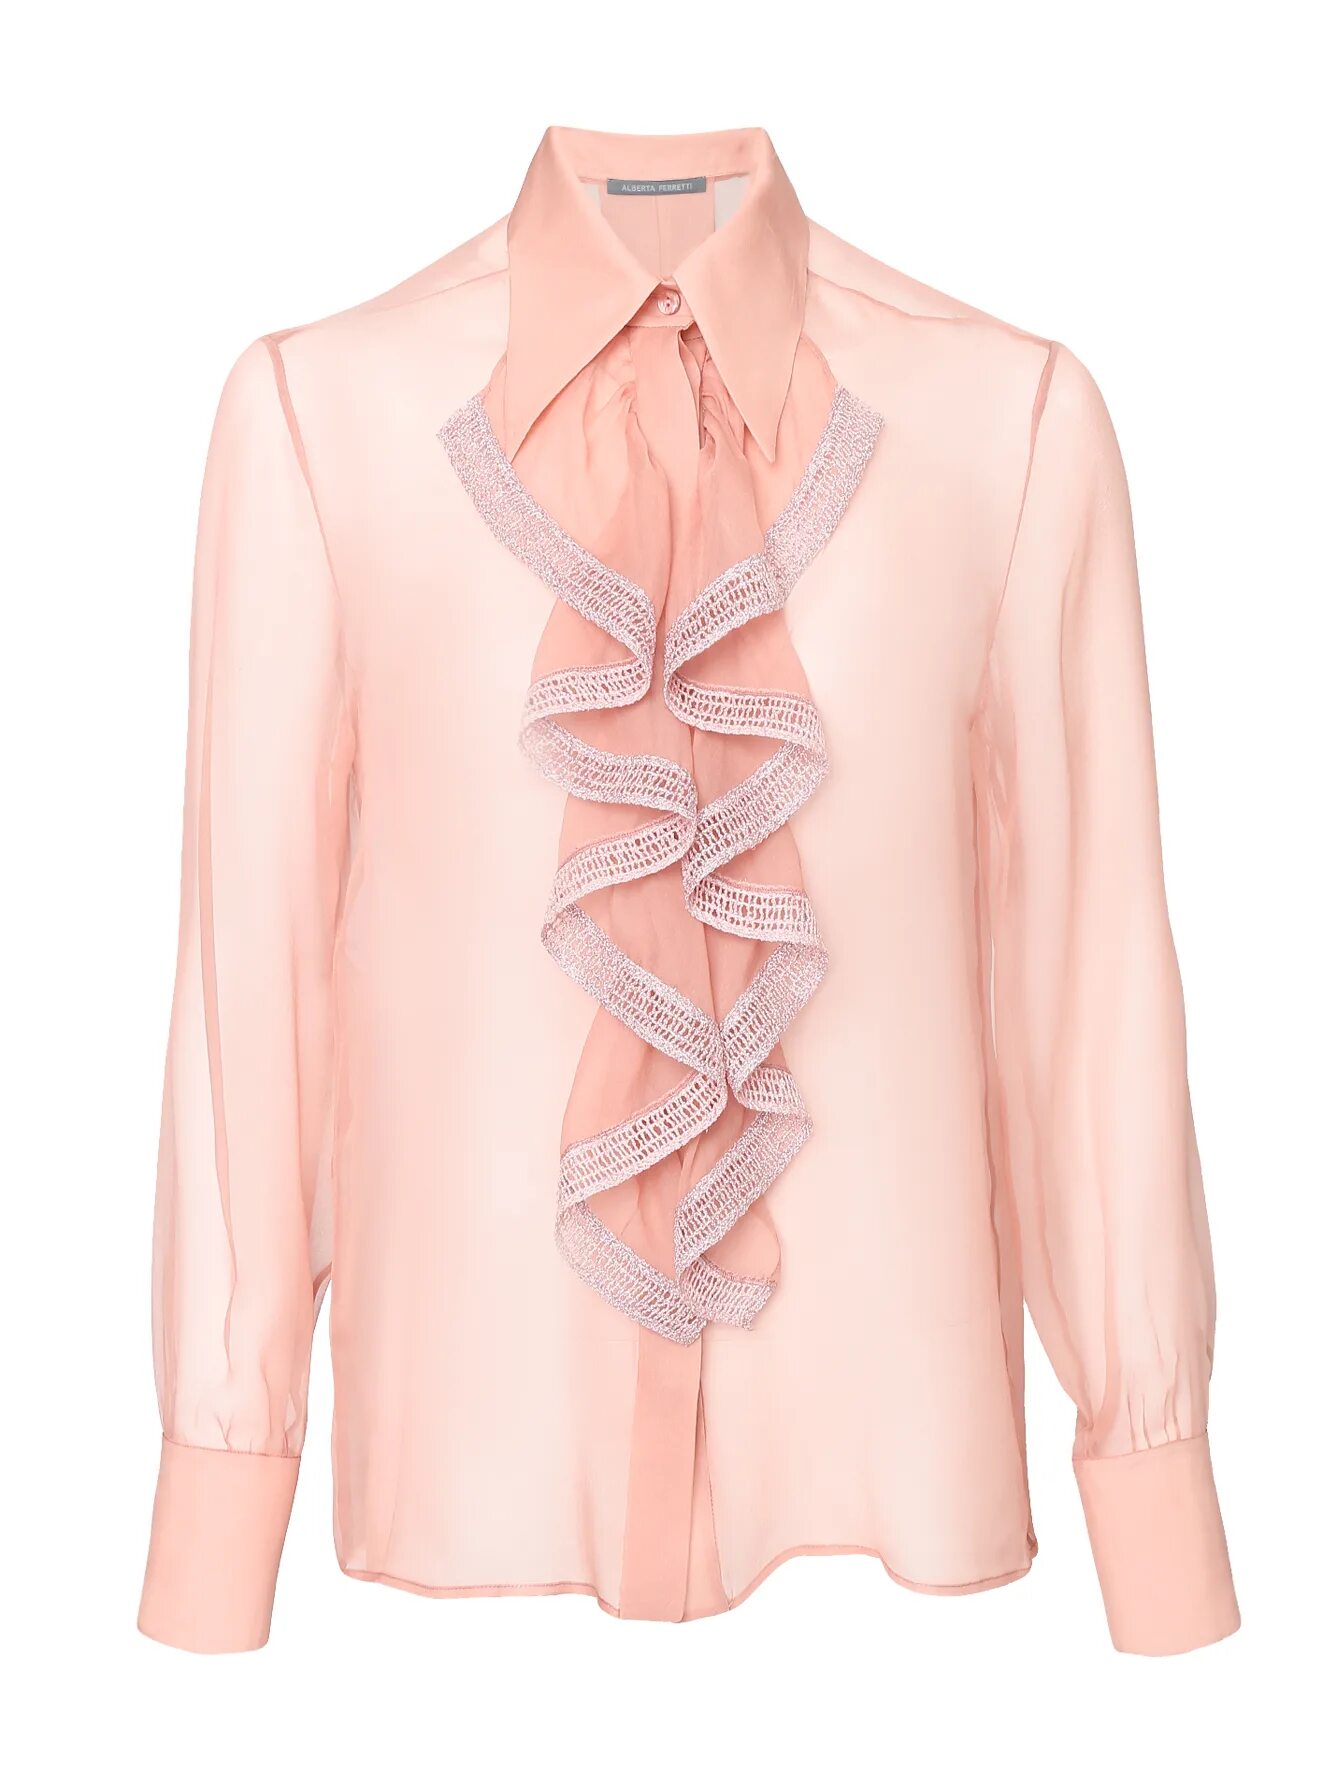 Женские блузки розовые. Alberta Ferretti блузка. Розовая блузка женская.